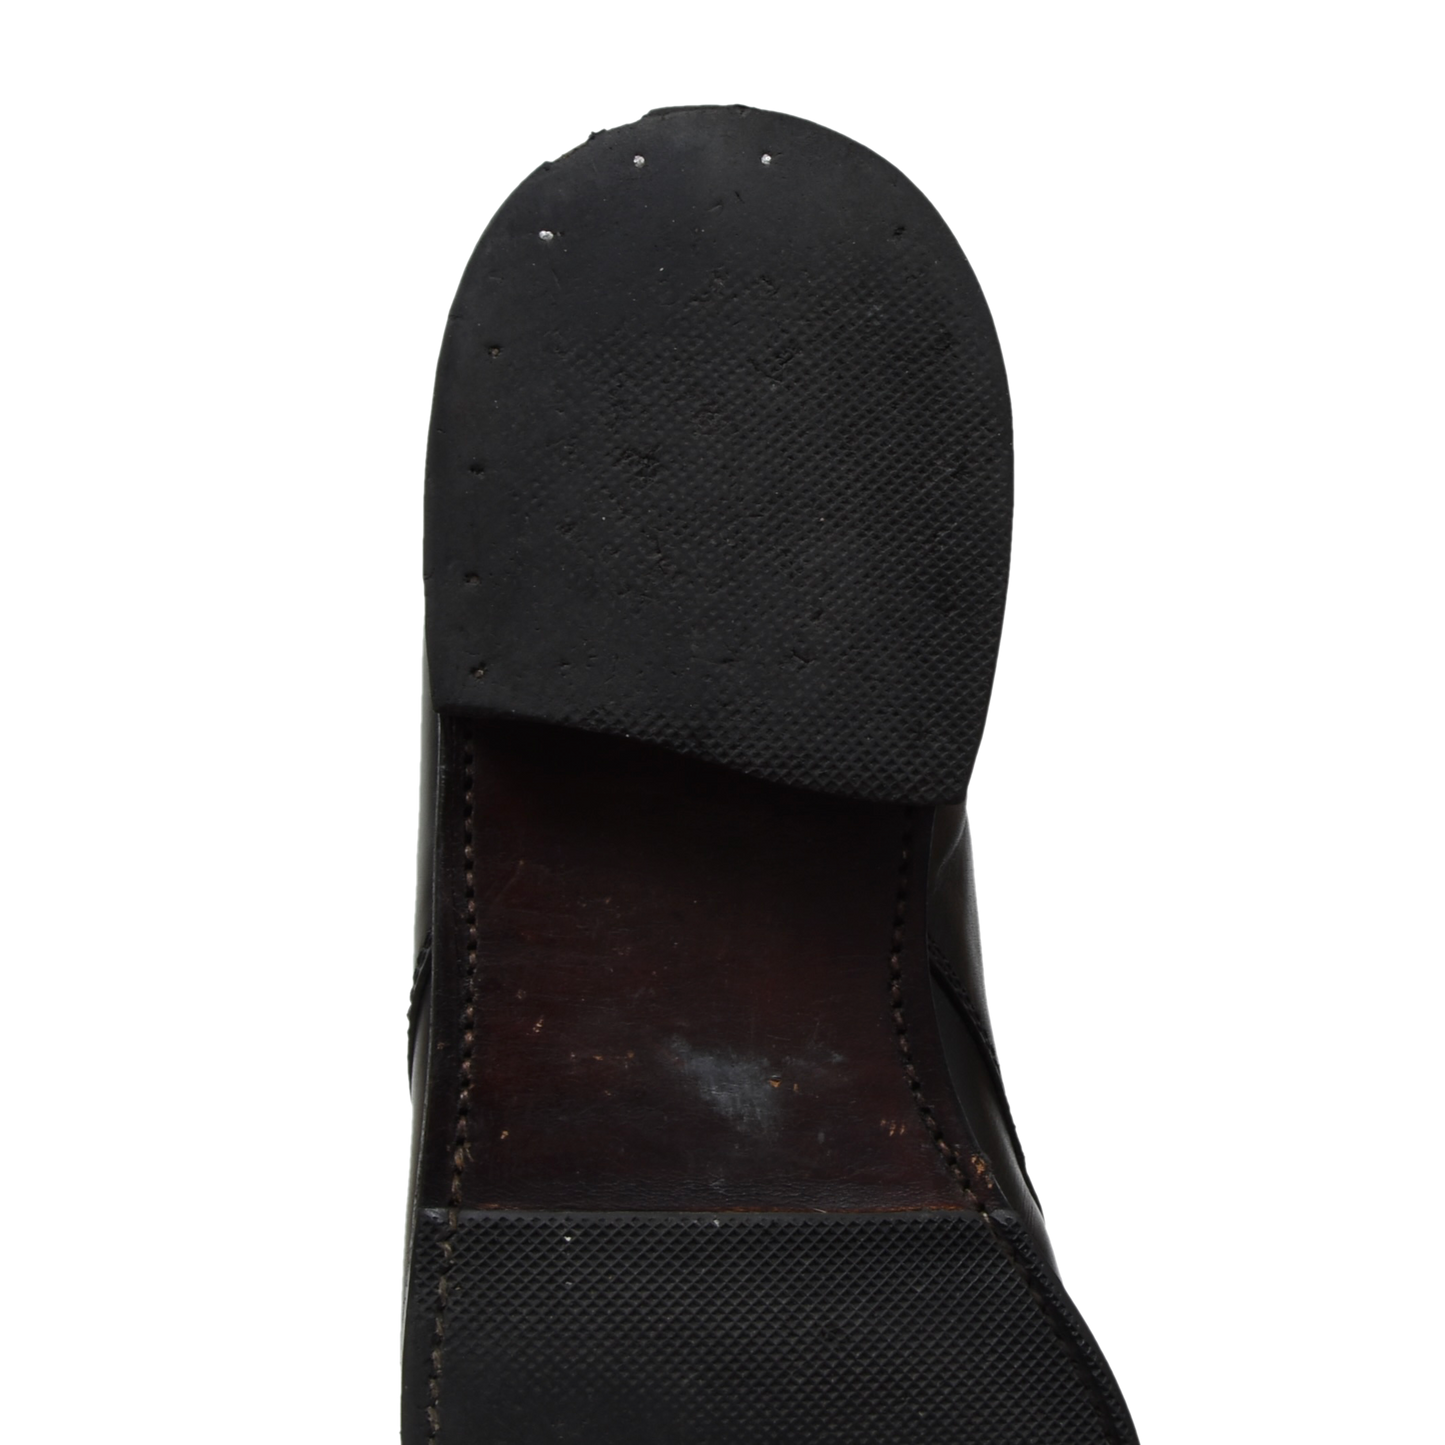 Ludwig Reiter Plain Toe Blucher Shoes Size 9 1/2 - Black